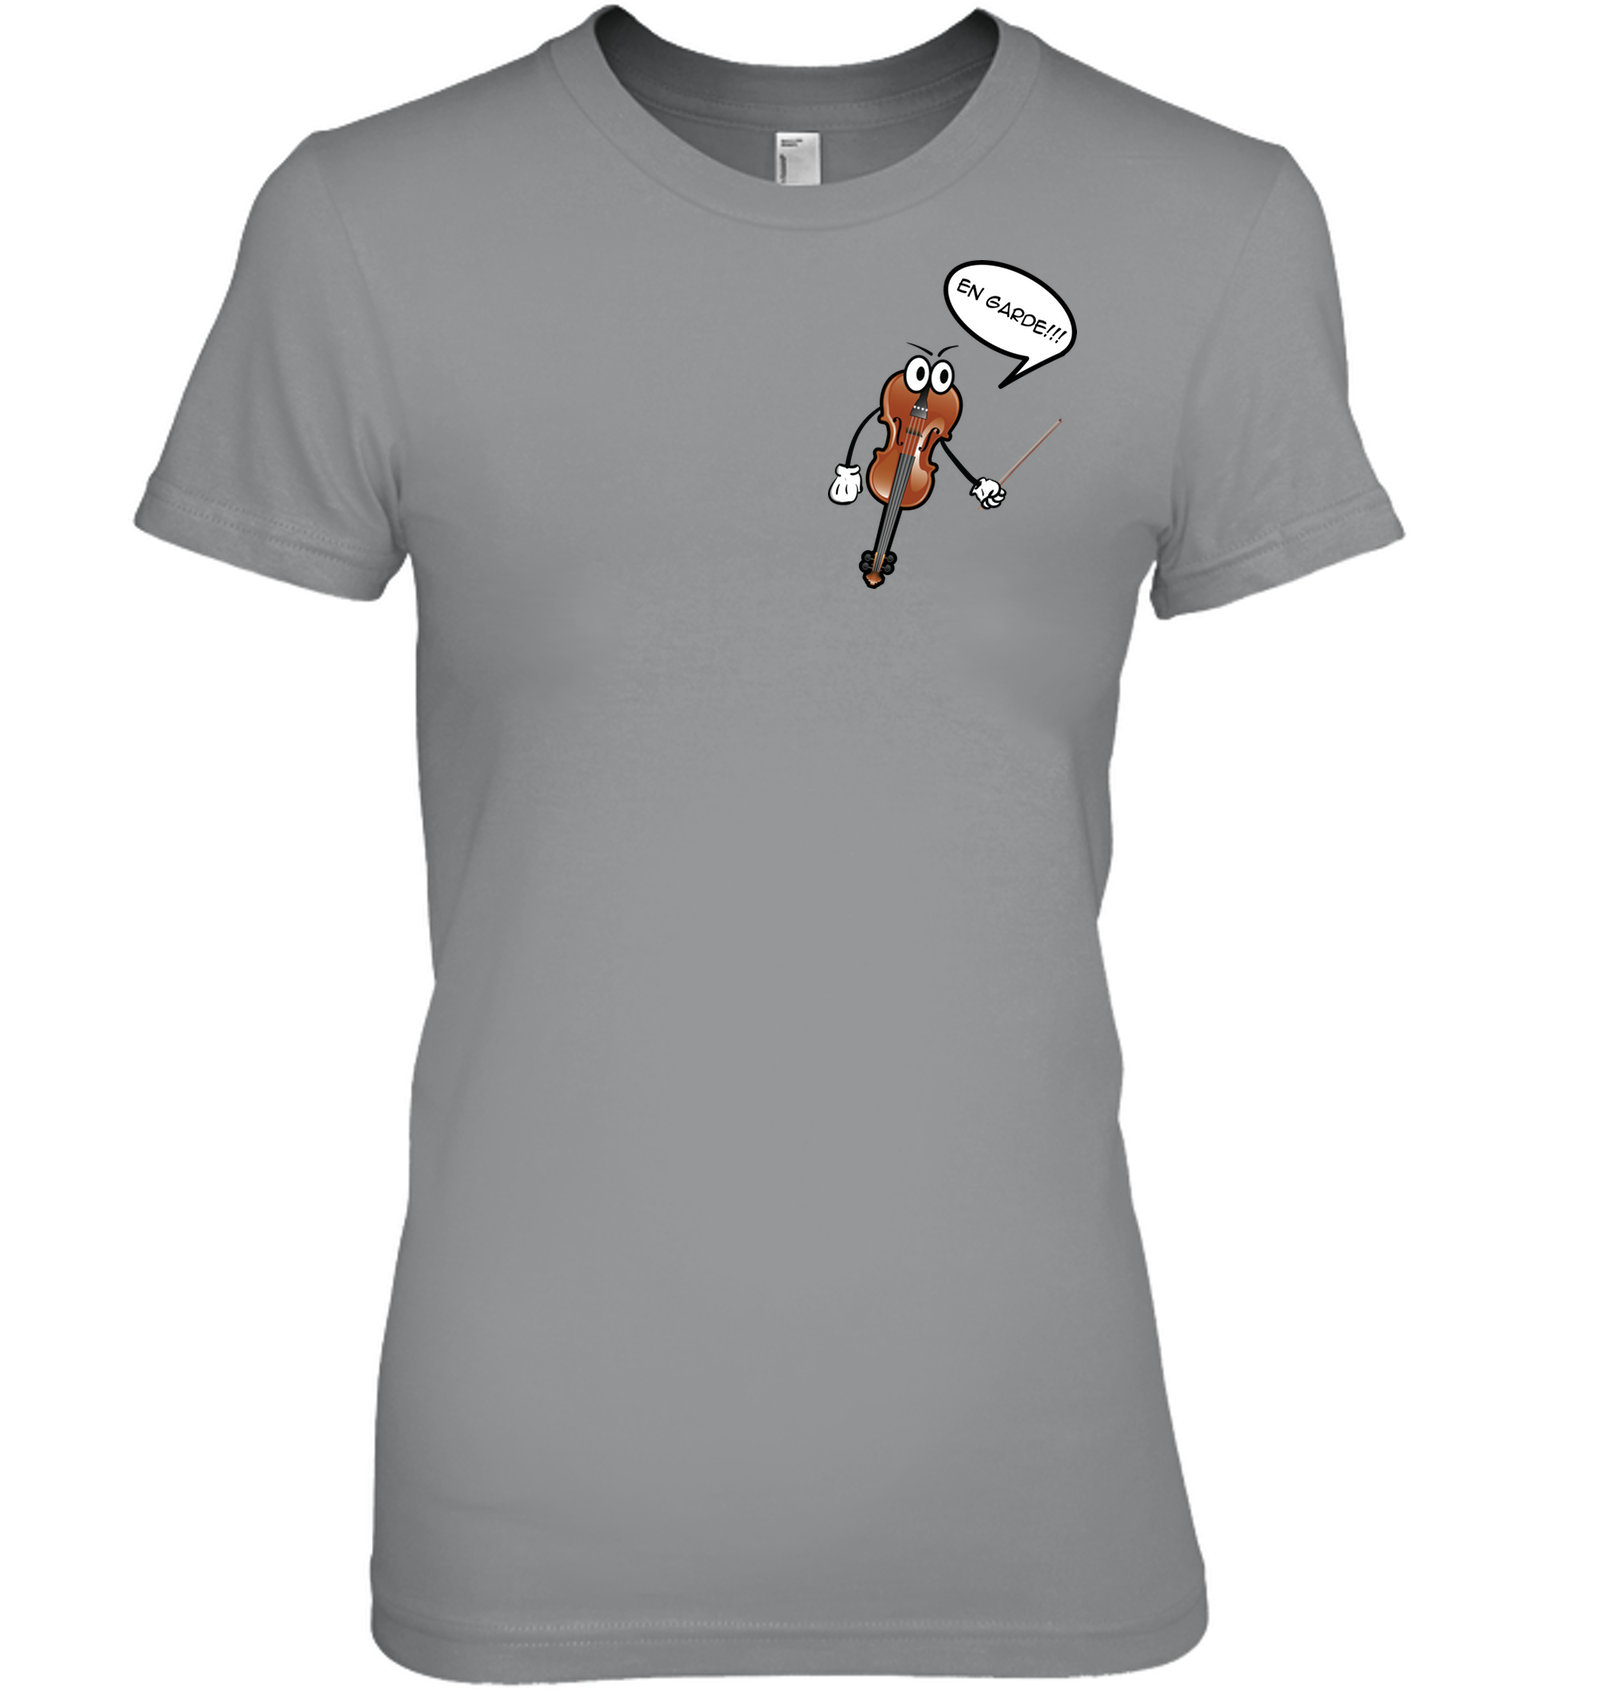 Mr Violin (Pocket Size) - Hanes Women's Nano-T® T-Shirt